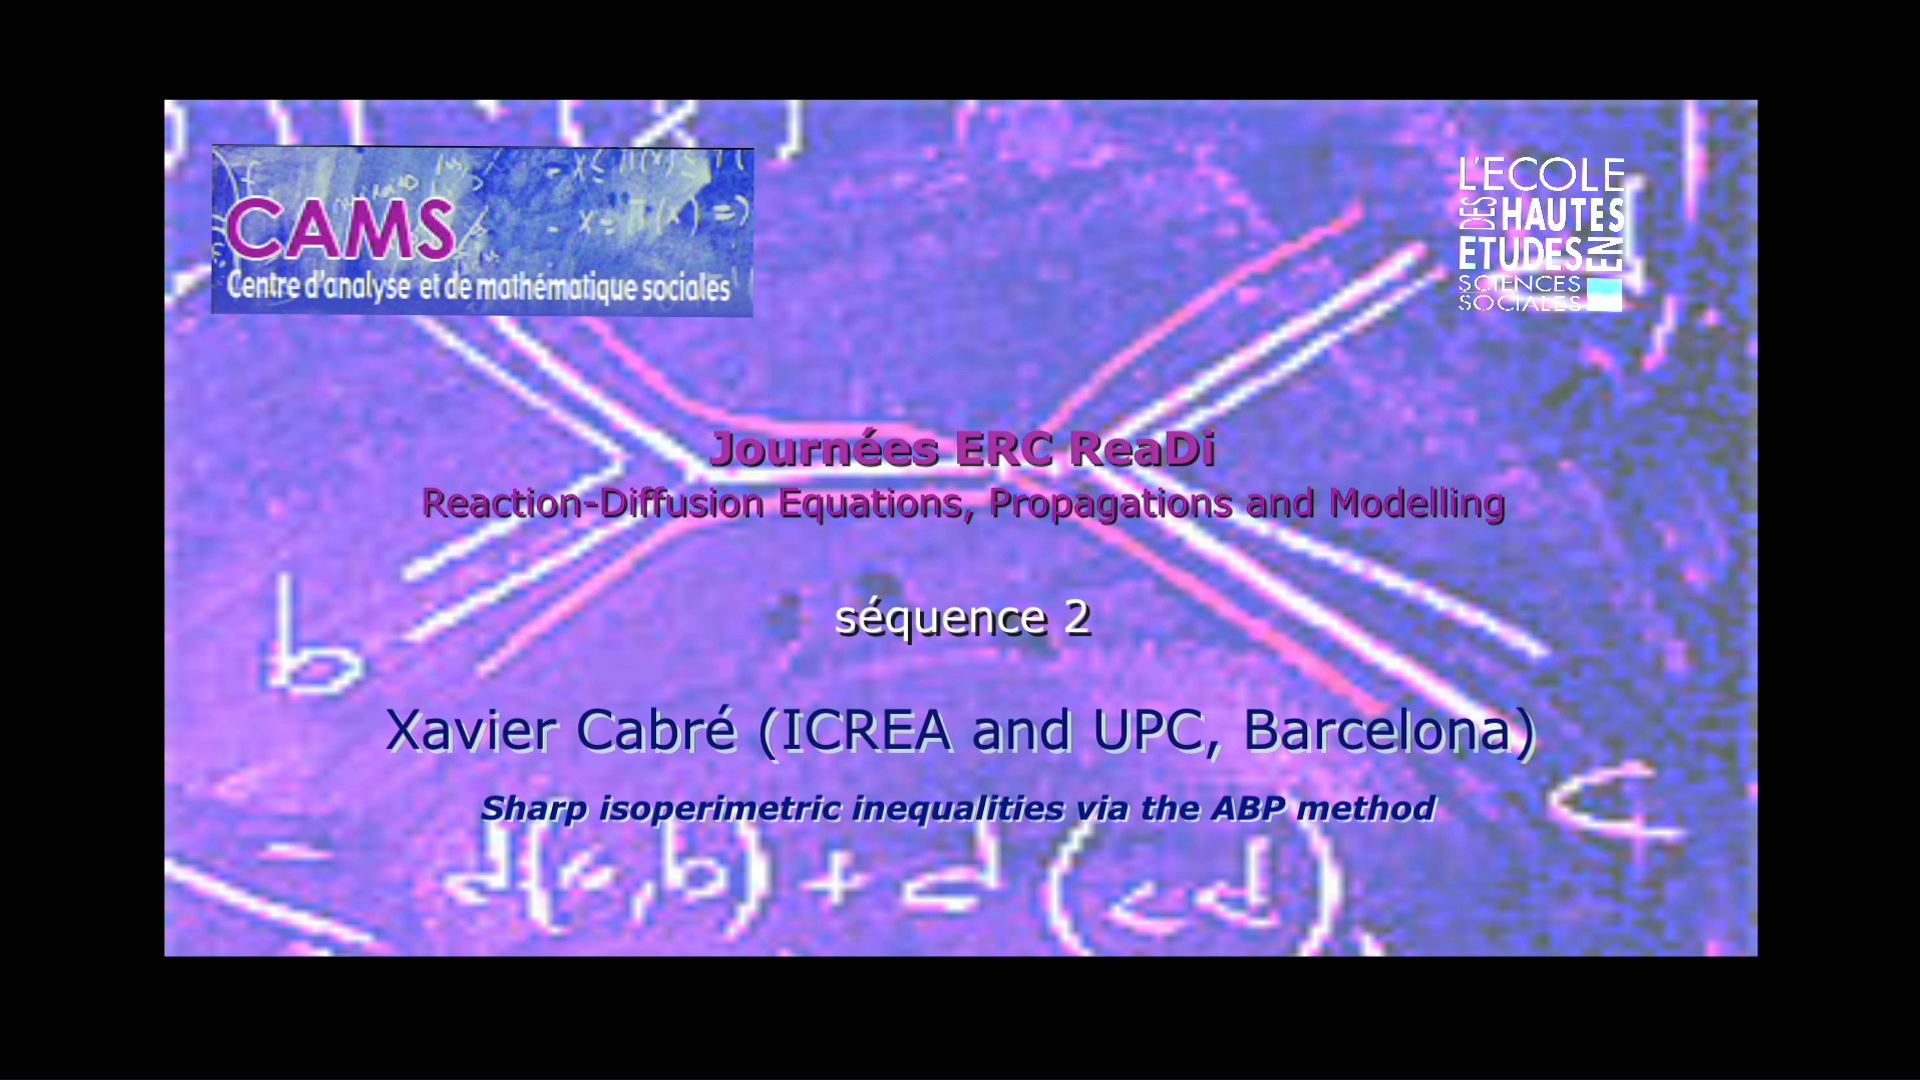 Xavier Cabré : Sharp isoperimetric inequalities via the ABP method